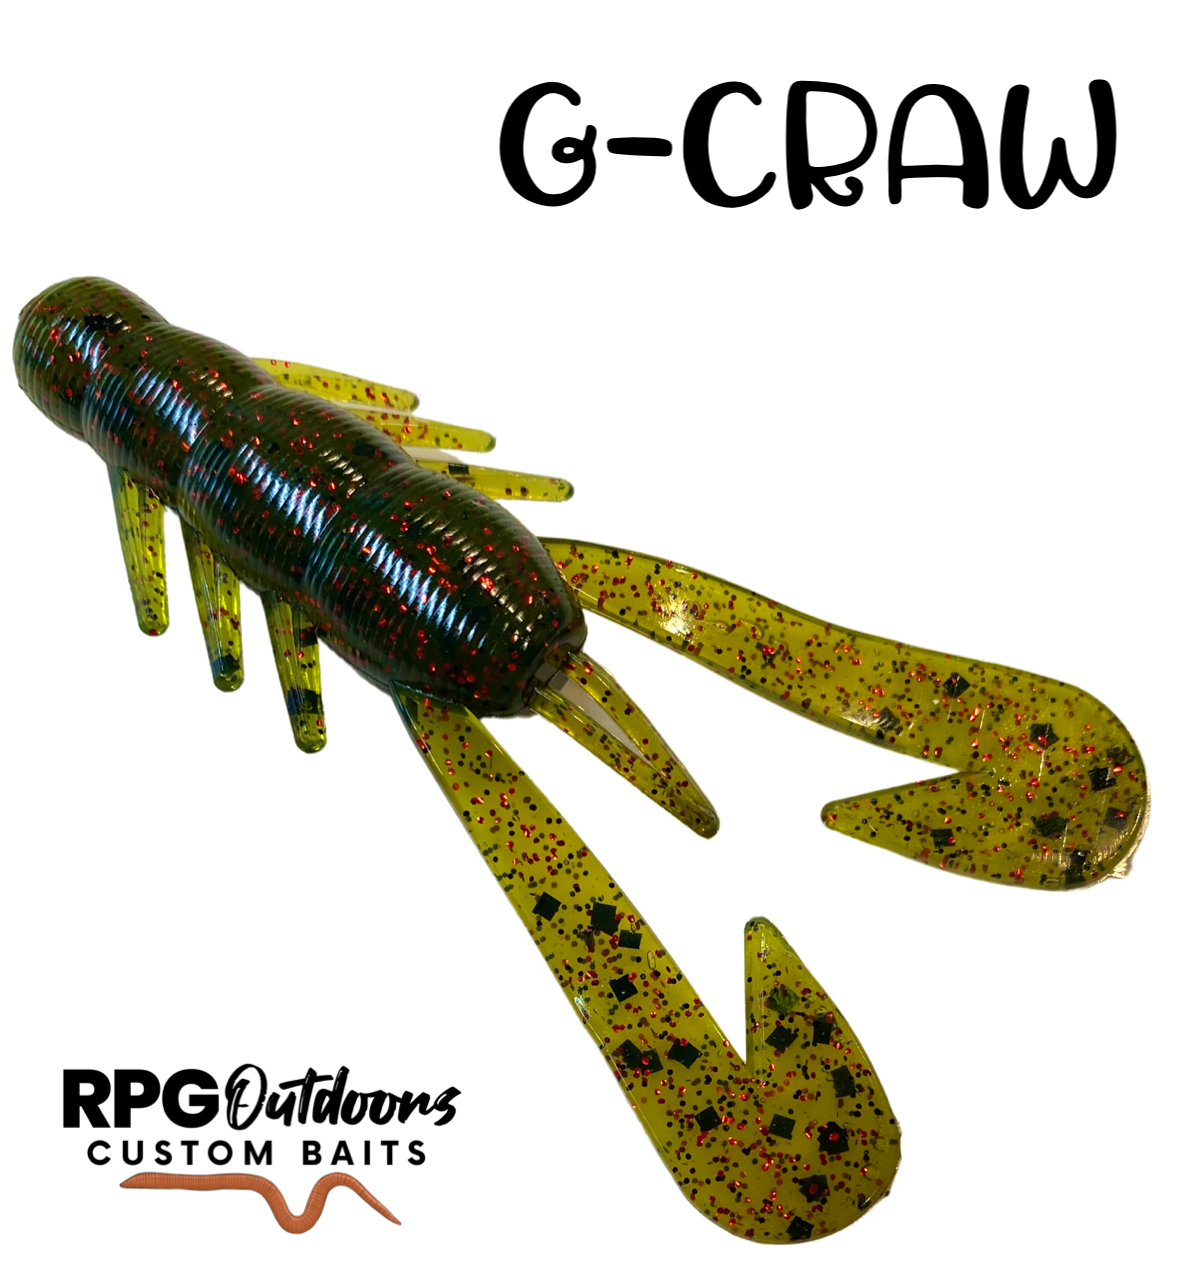 G-Craw 4” – RPG Outdoors Custom Baits